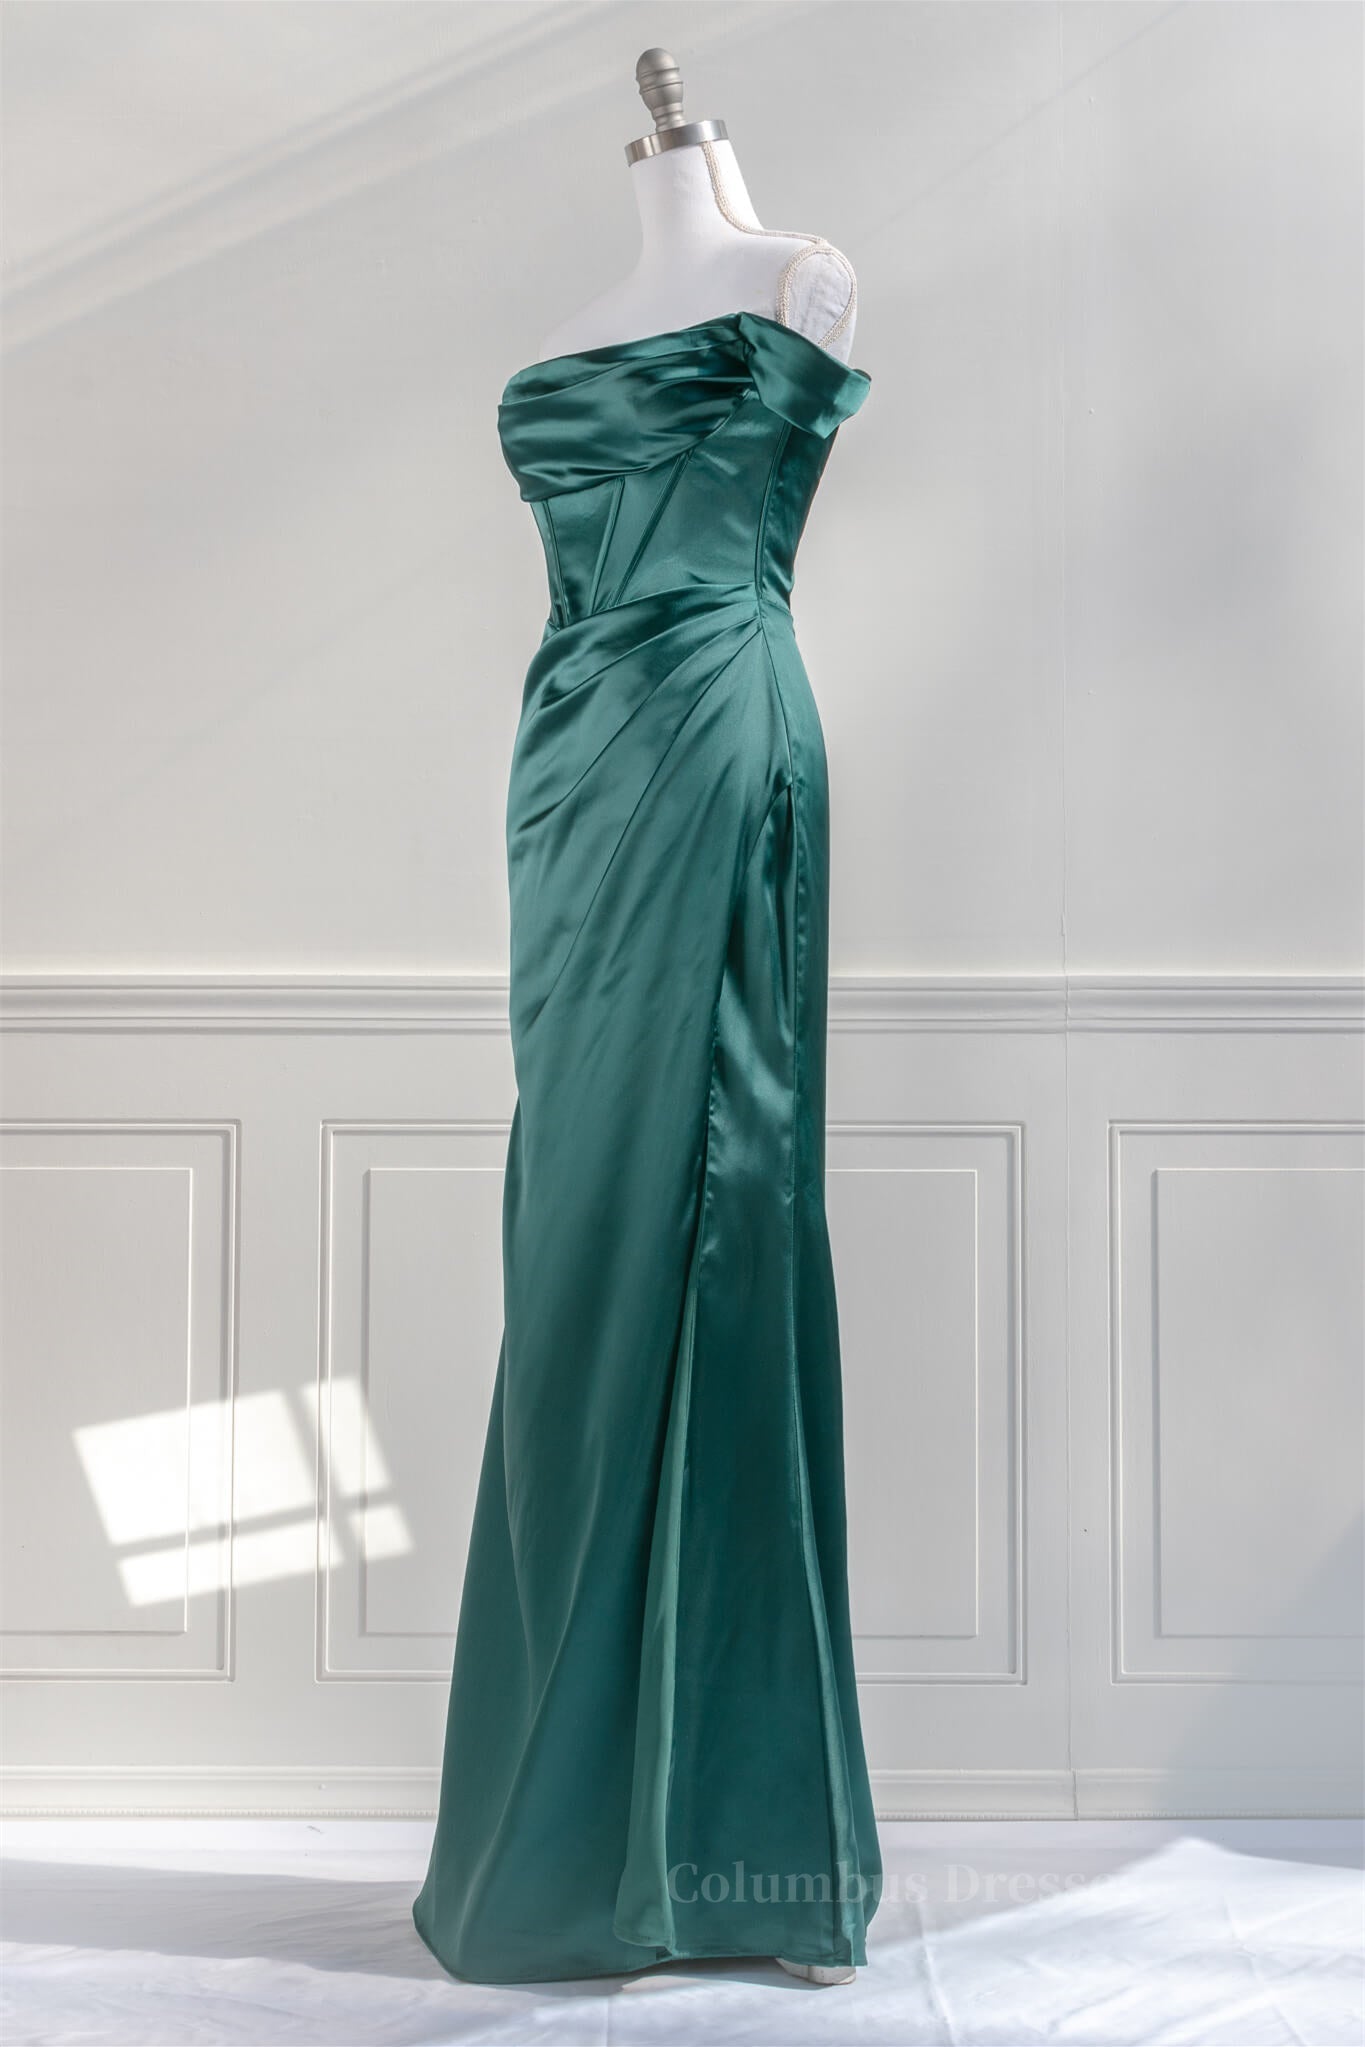 Bridesmaid Dresses Designs, Hunter Green Off-the-Shoulder Satin Mermaid Long Prom Dress with Slit